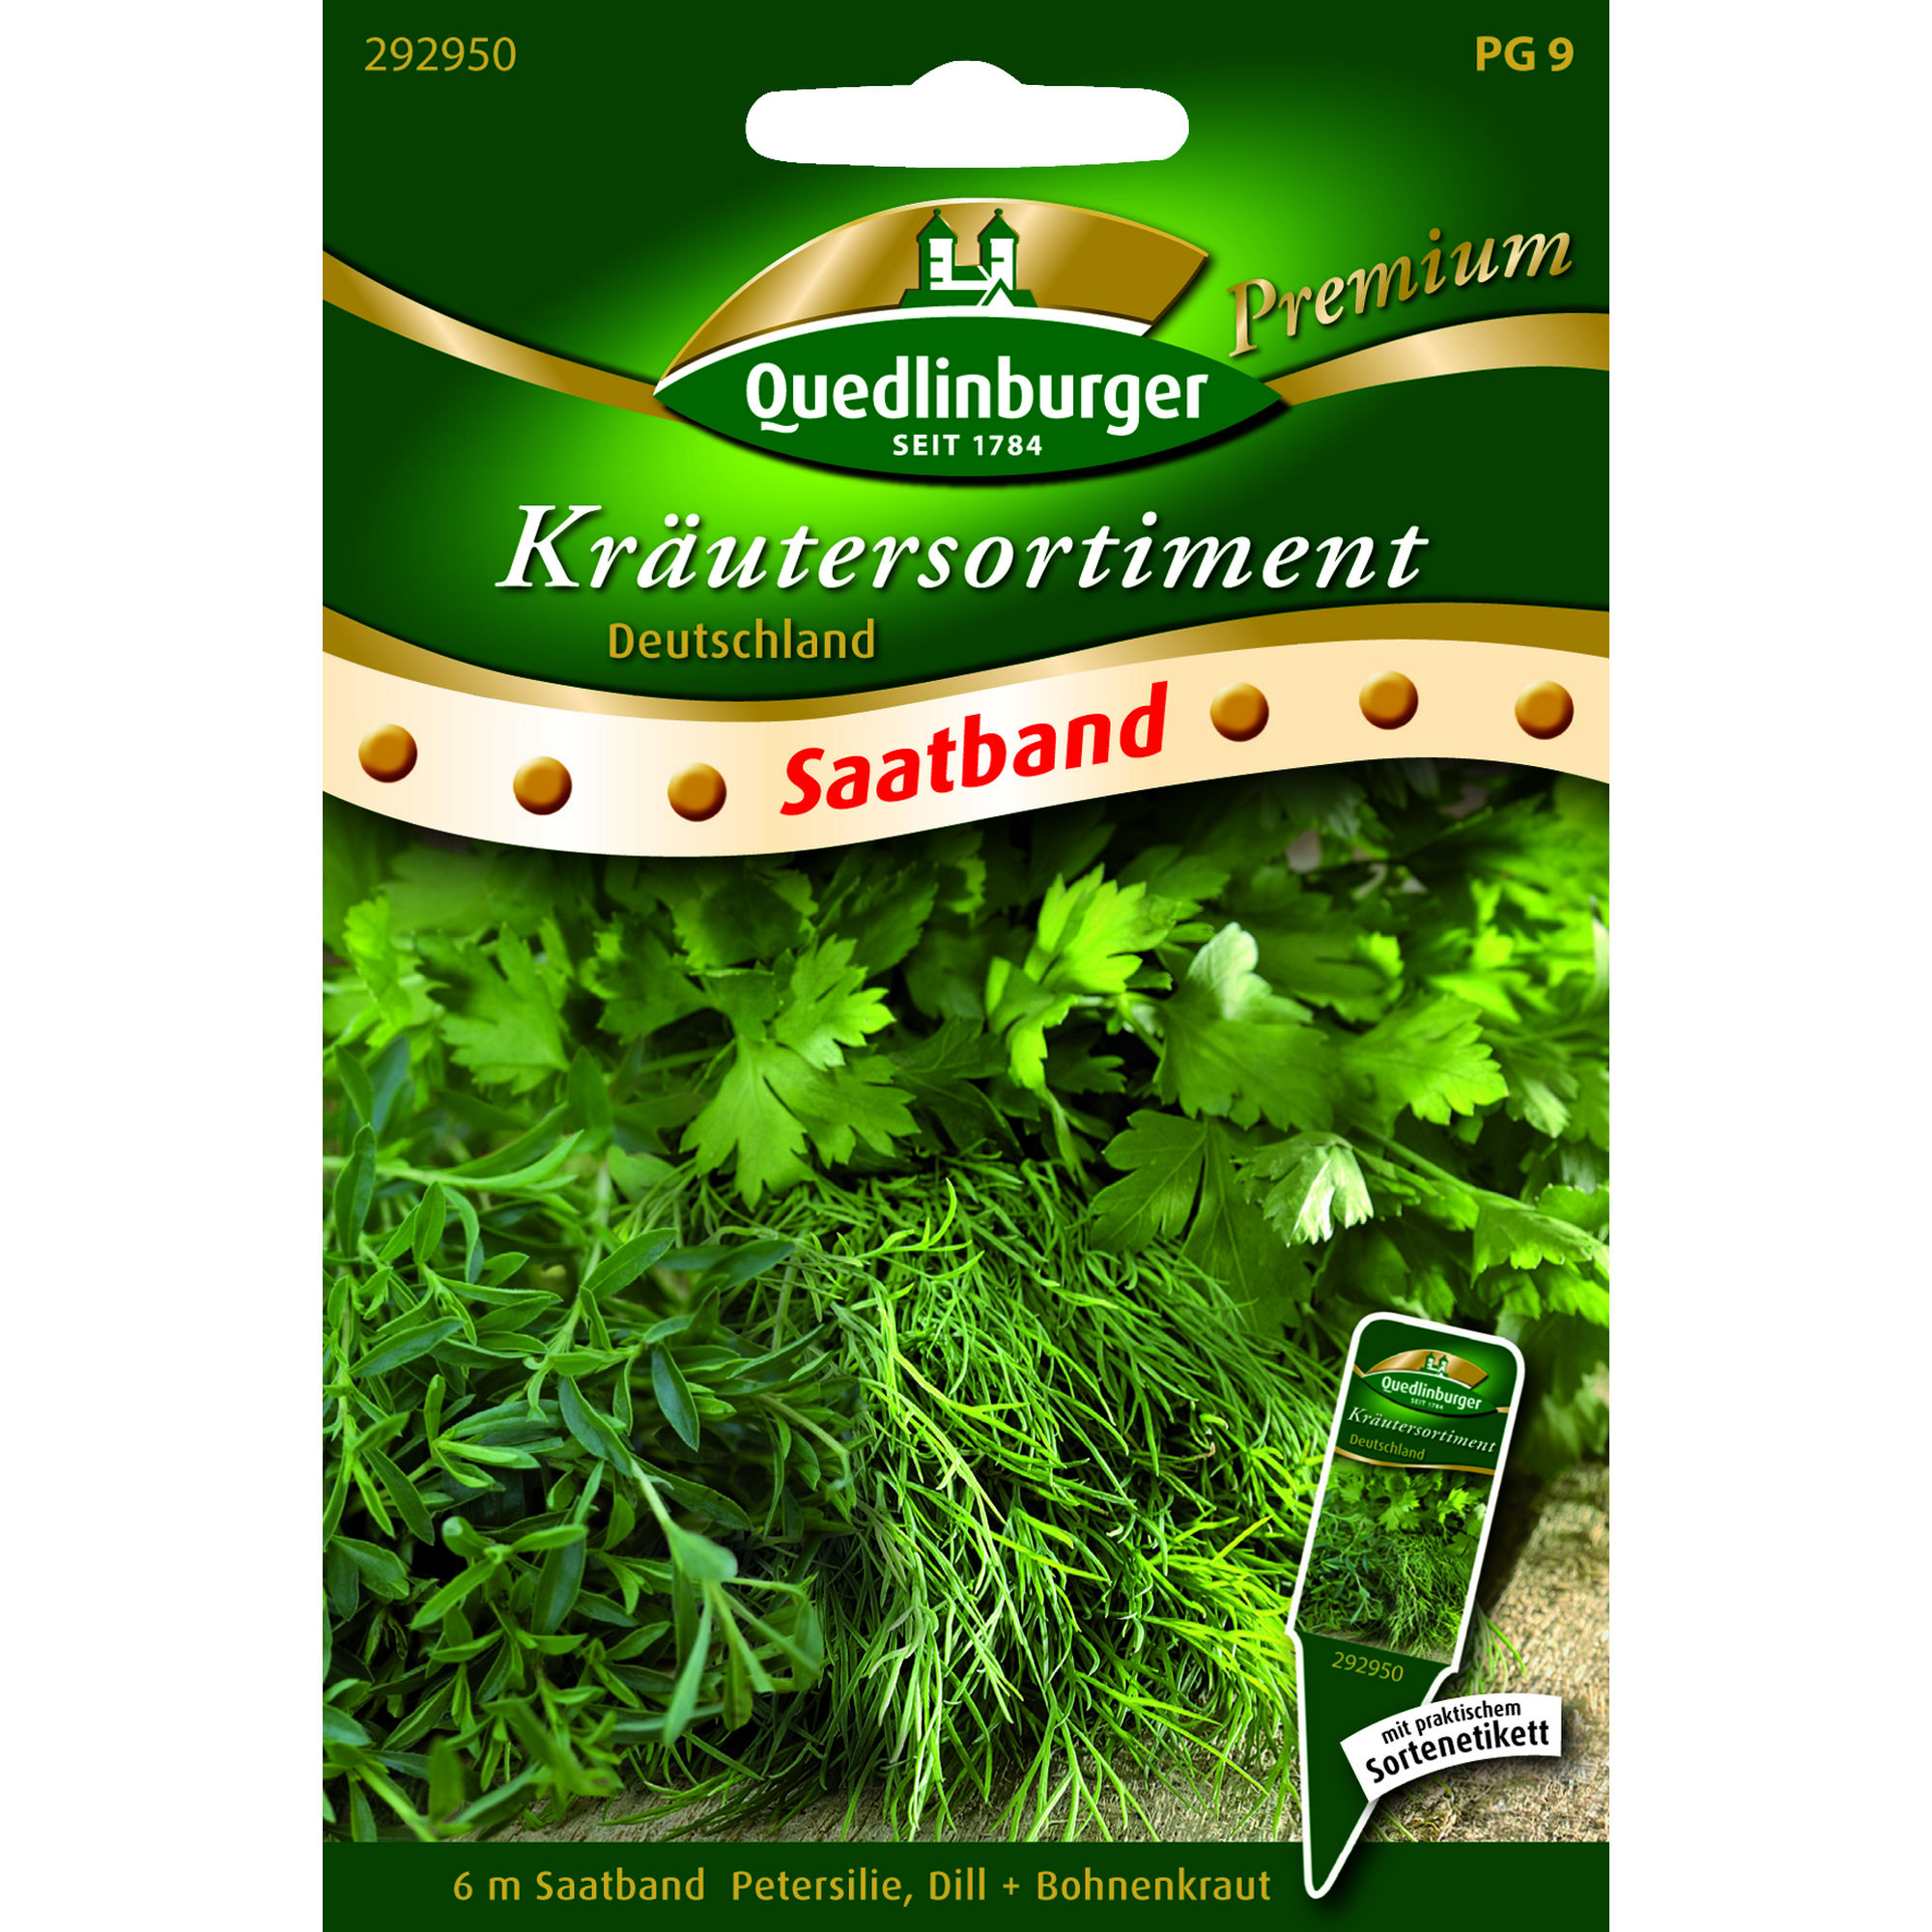 Premium Kräutersortiment Deutschland, Saatband + product picture